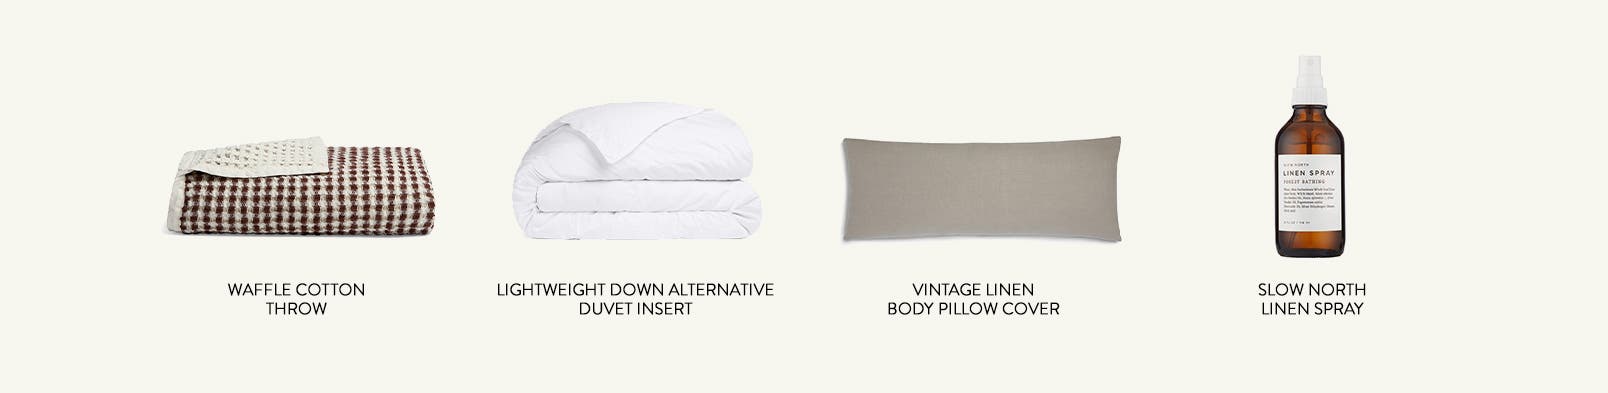 Waffle weave throw blanket, down alternative duvet insert, linen body pillow cover and linen spray.